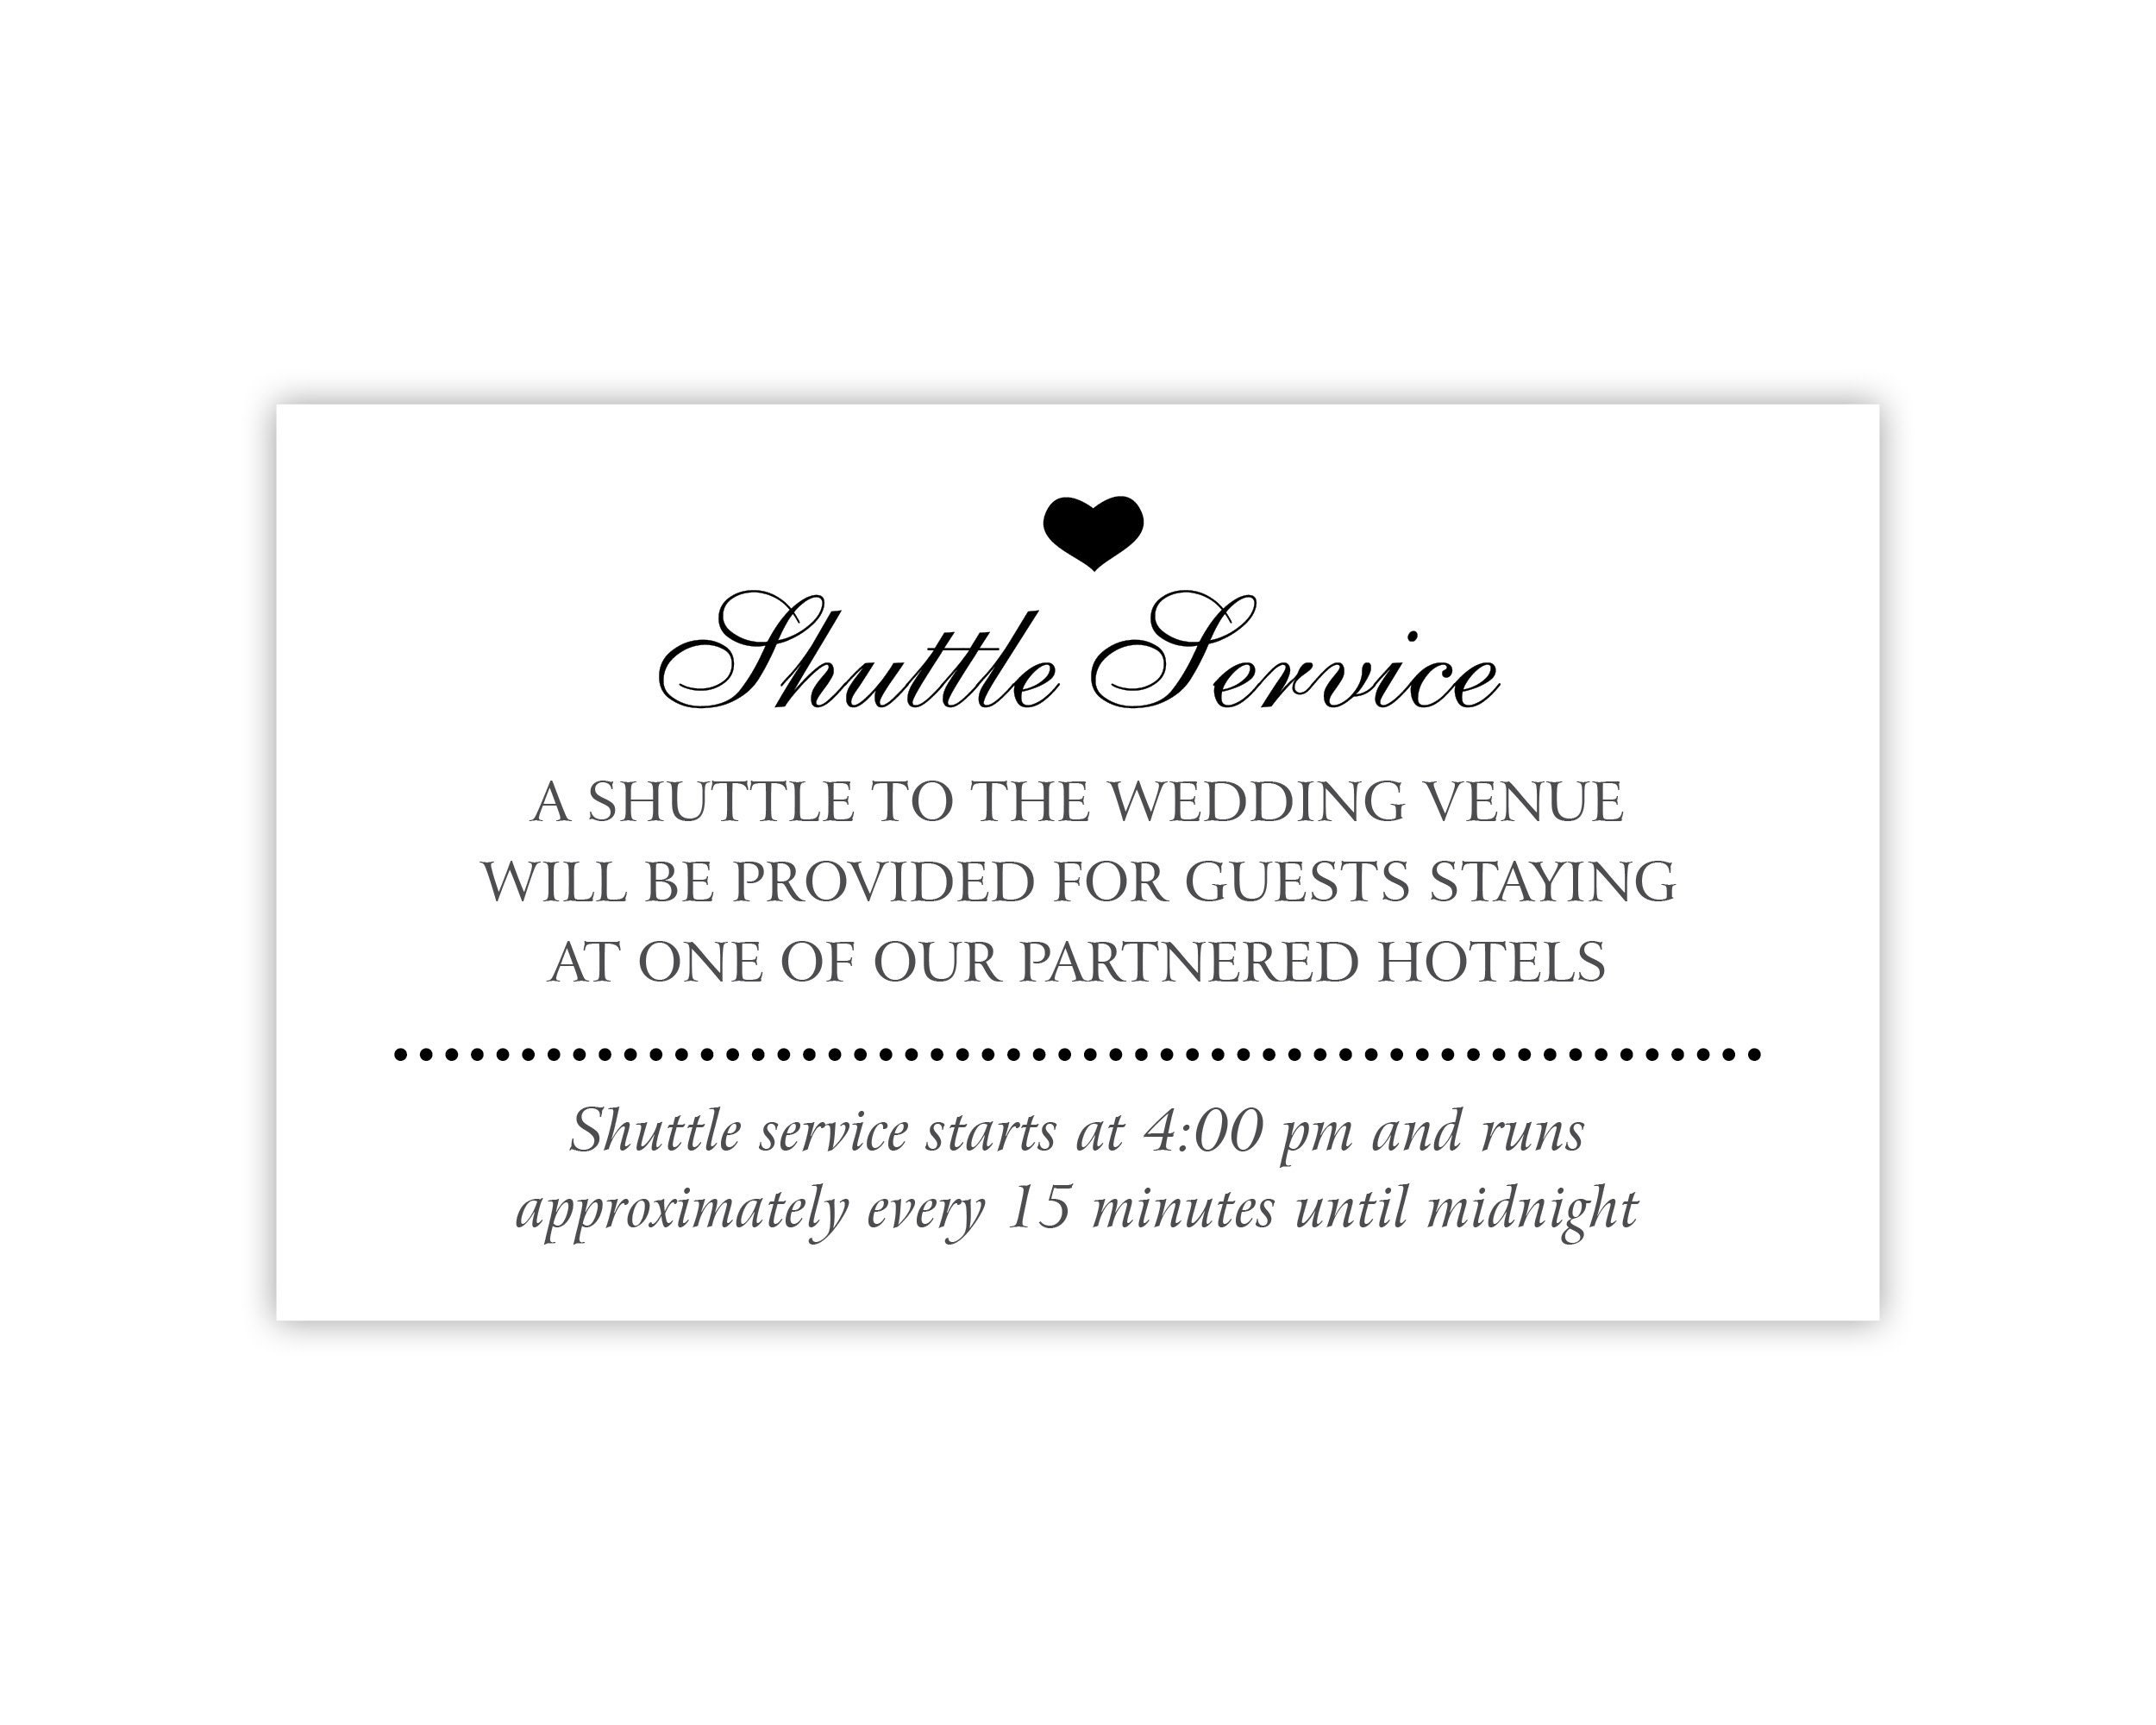 Wedding Shuttle Service Card W/ Travel Details for Destination